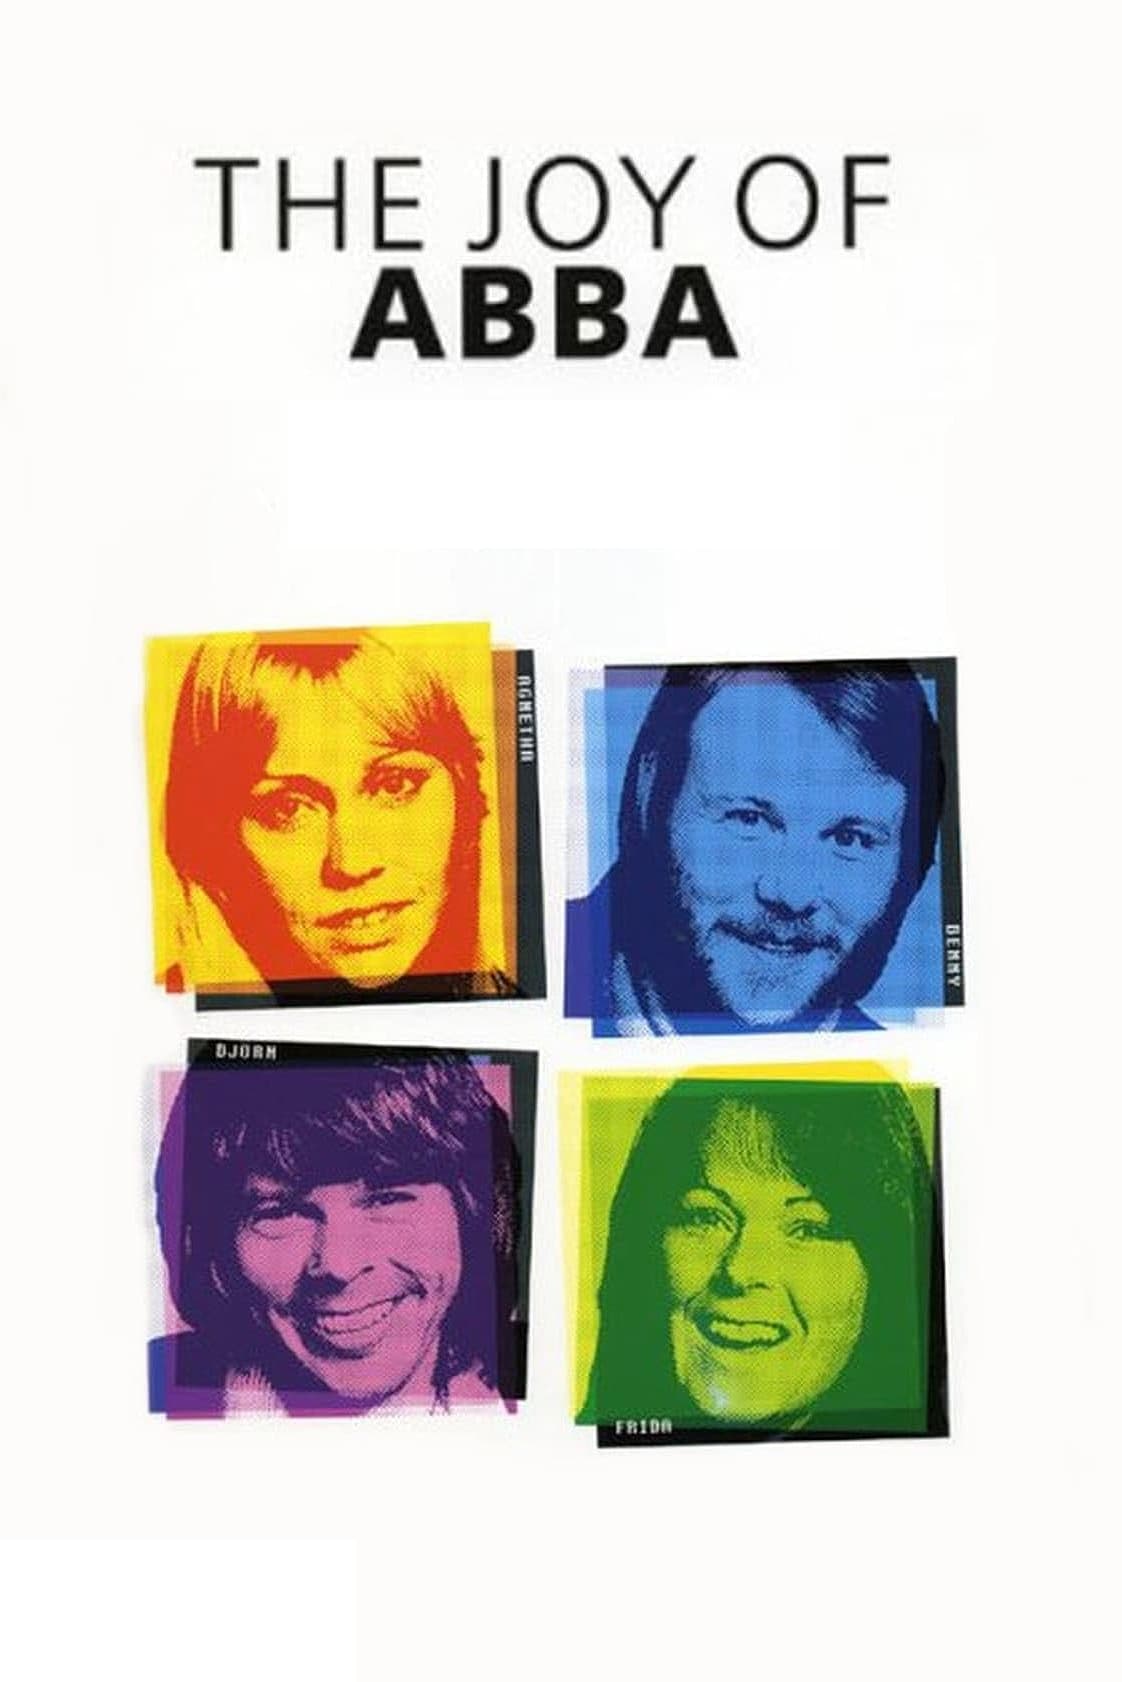 The Joy of ABBA